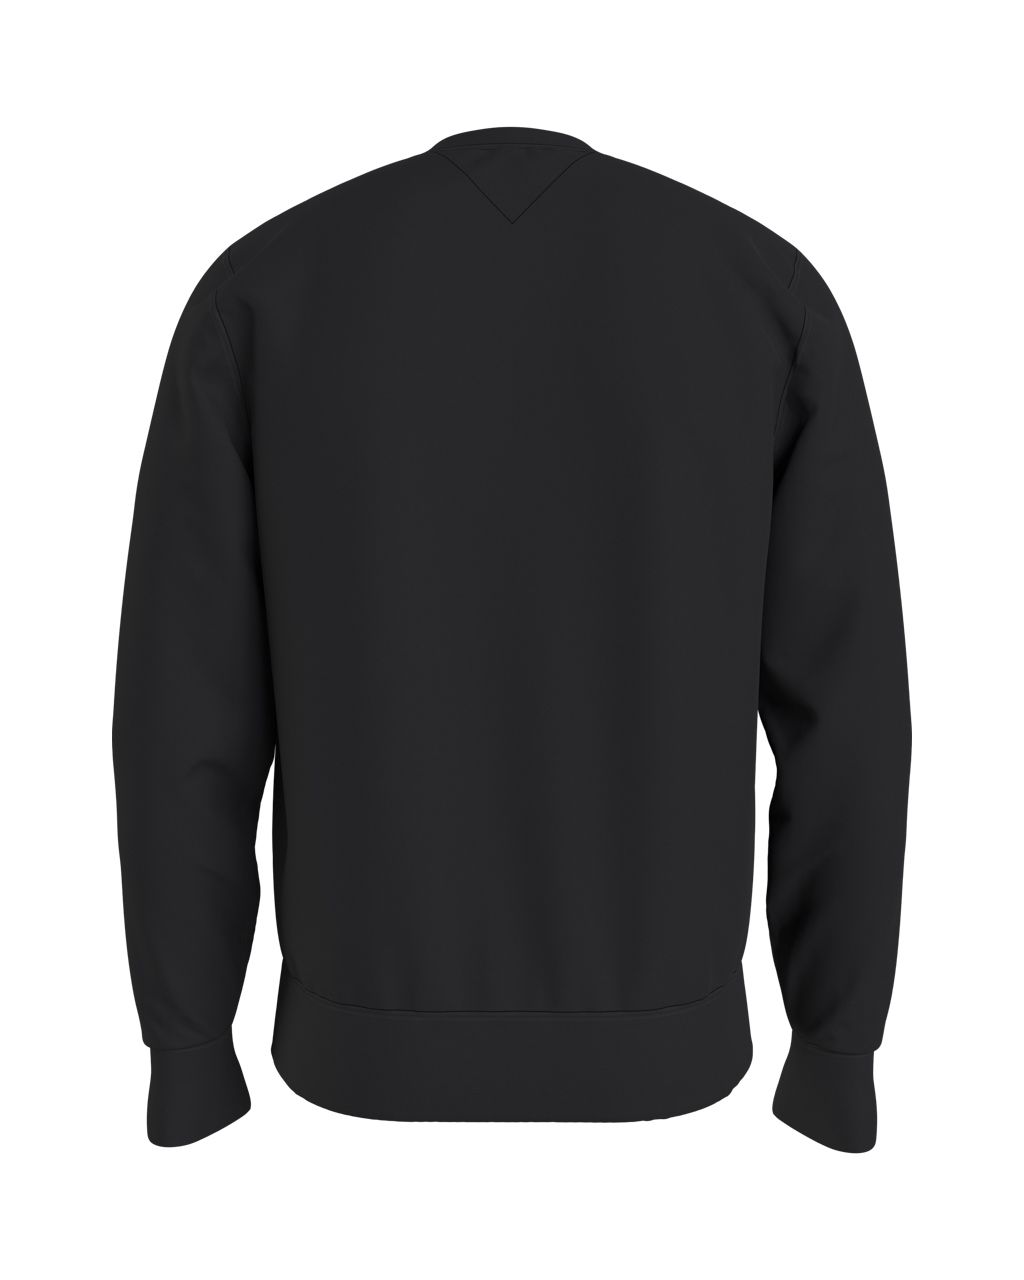 Tommy Hilfiger Menswear Sweater Zwart 064270-001-L